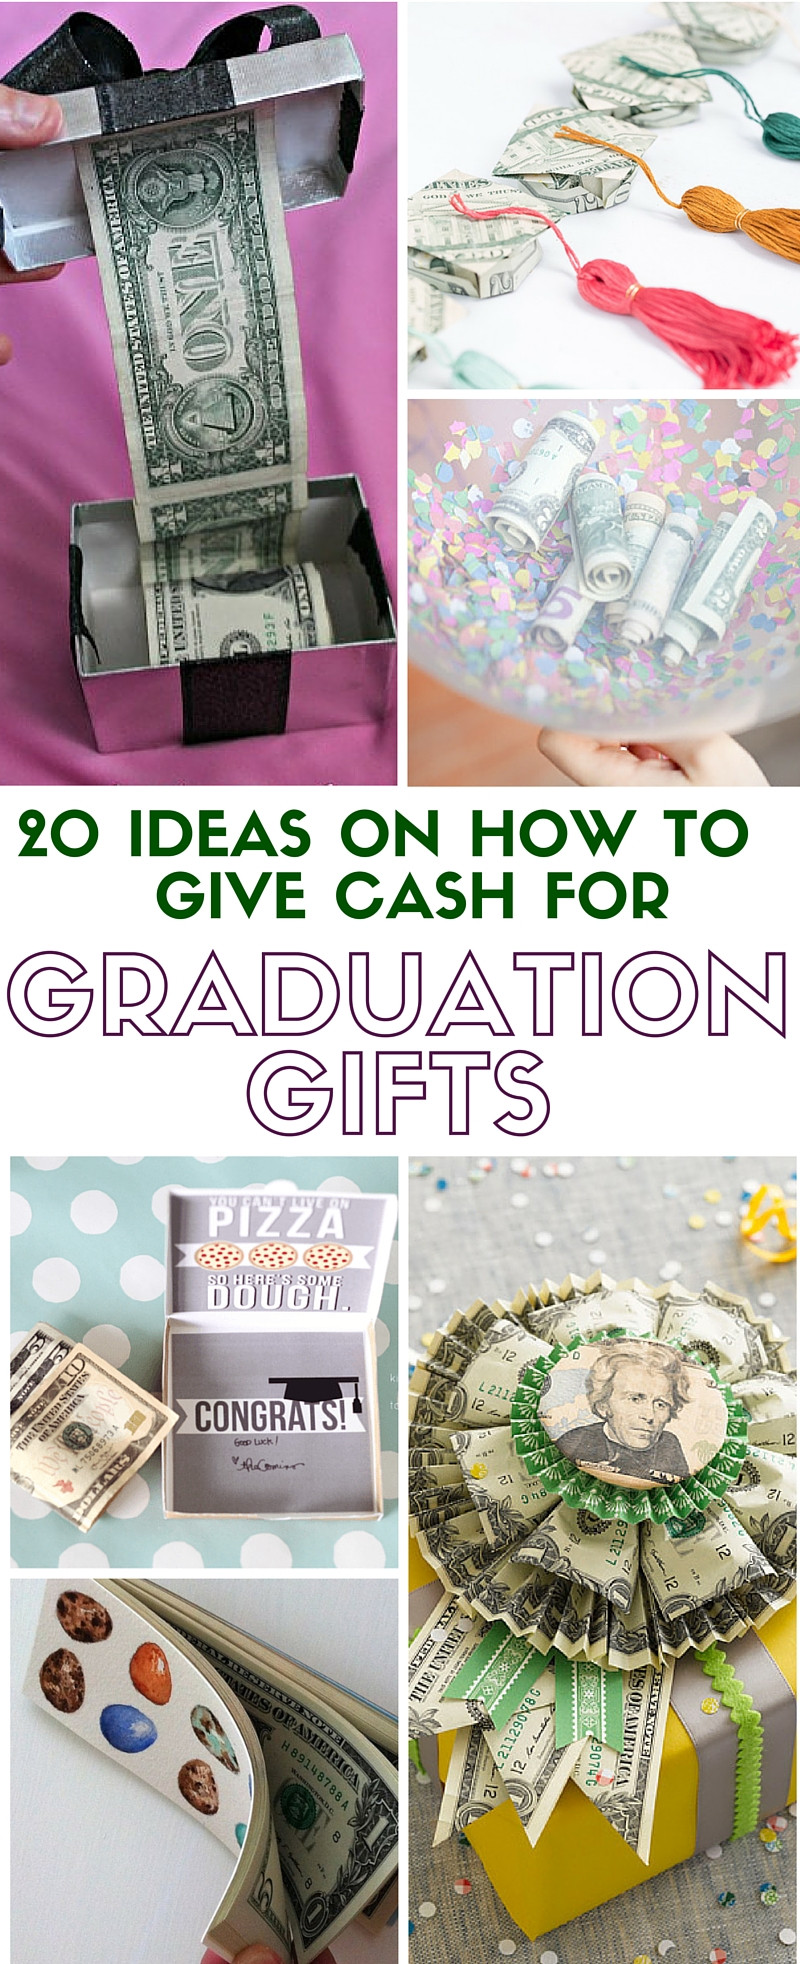 Top Graduation Gift Ideas For Senior Graduates
 31 Back To School Teacher Gift Ideas The Crafty Blog Stalker